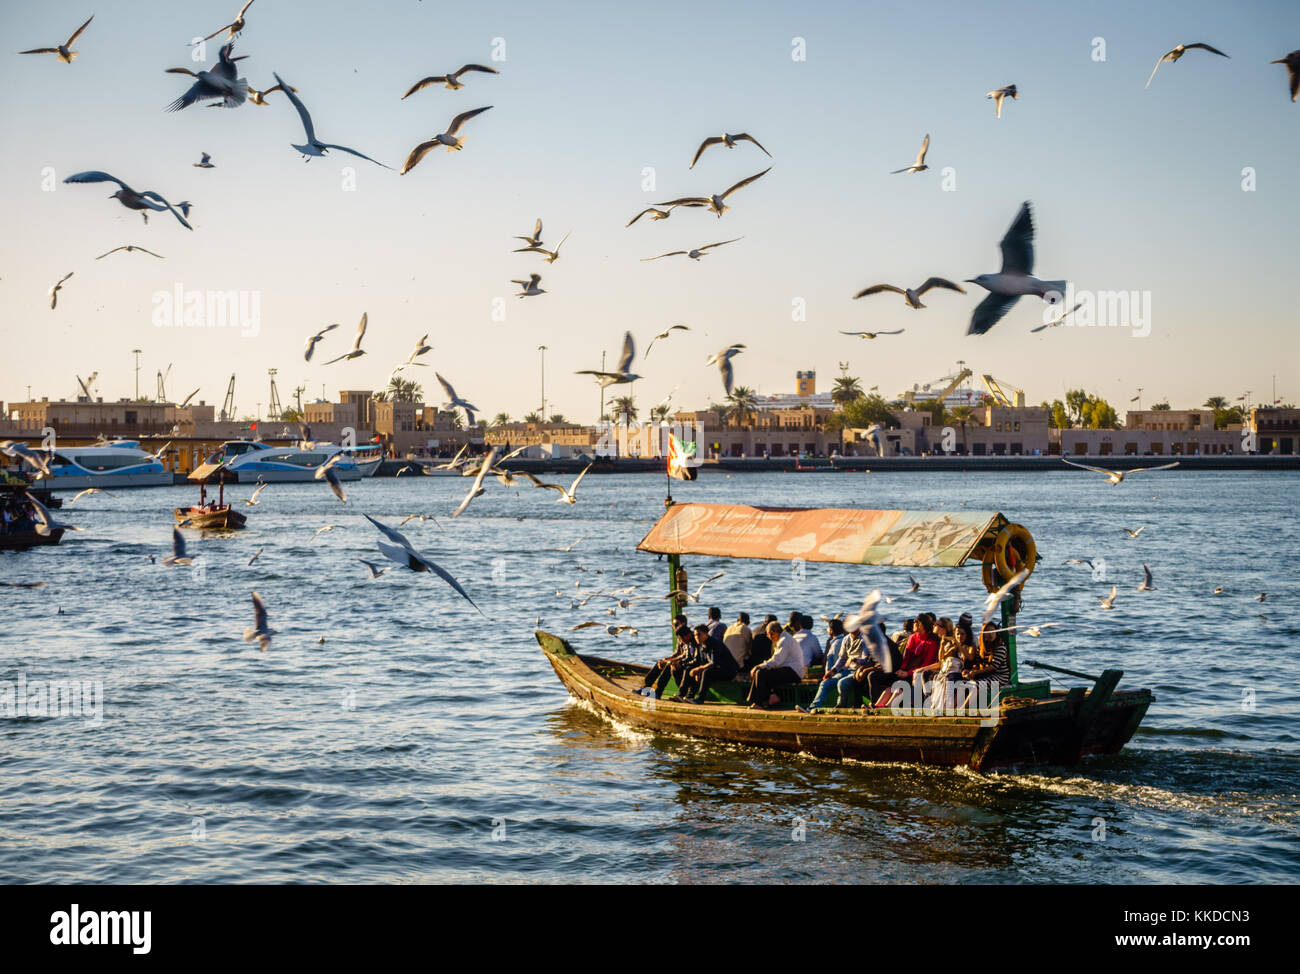 Dubai, UAE, February 5, 2016: Abra is making its way across Dubai Creek as flock of seagulls circling above Stock Photo